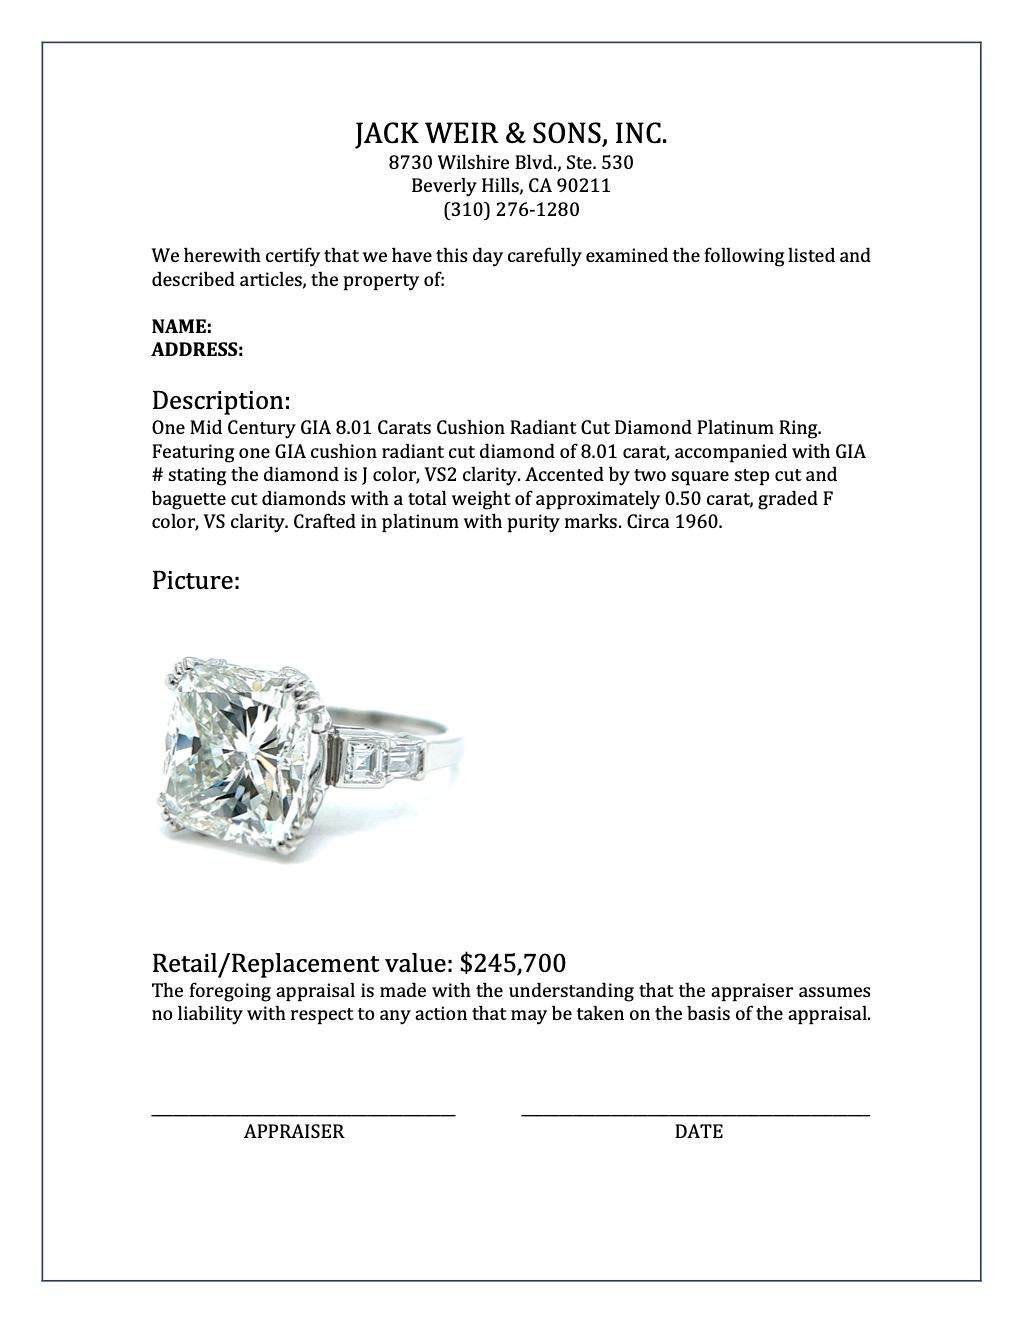 Mid Century GIA 8.01 Carats Cushion Radiant Cut Diamond Platinum Ring 2